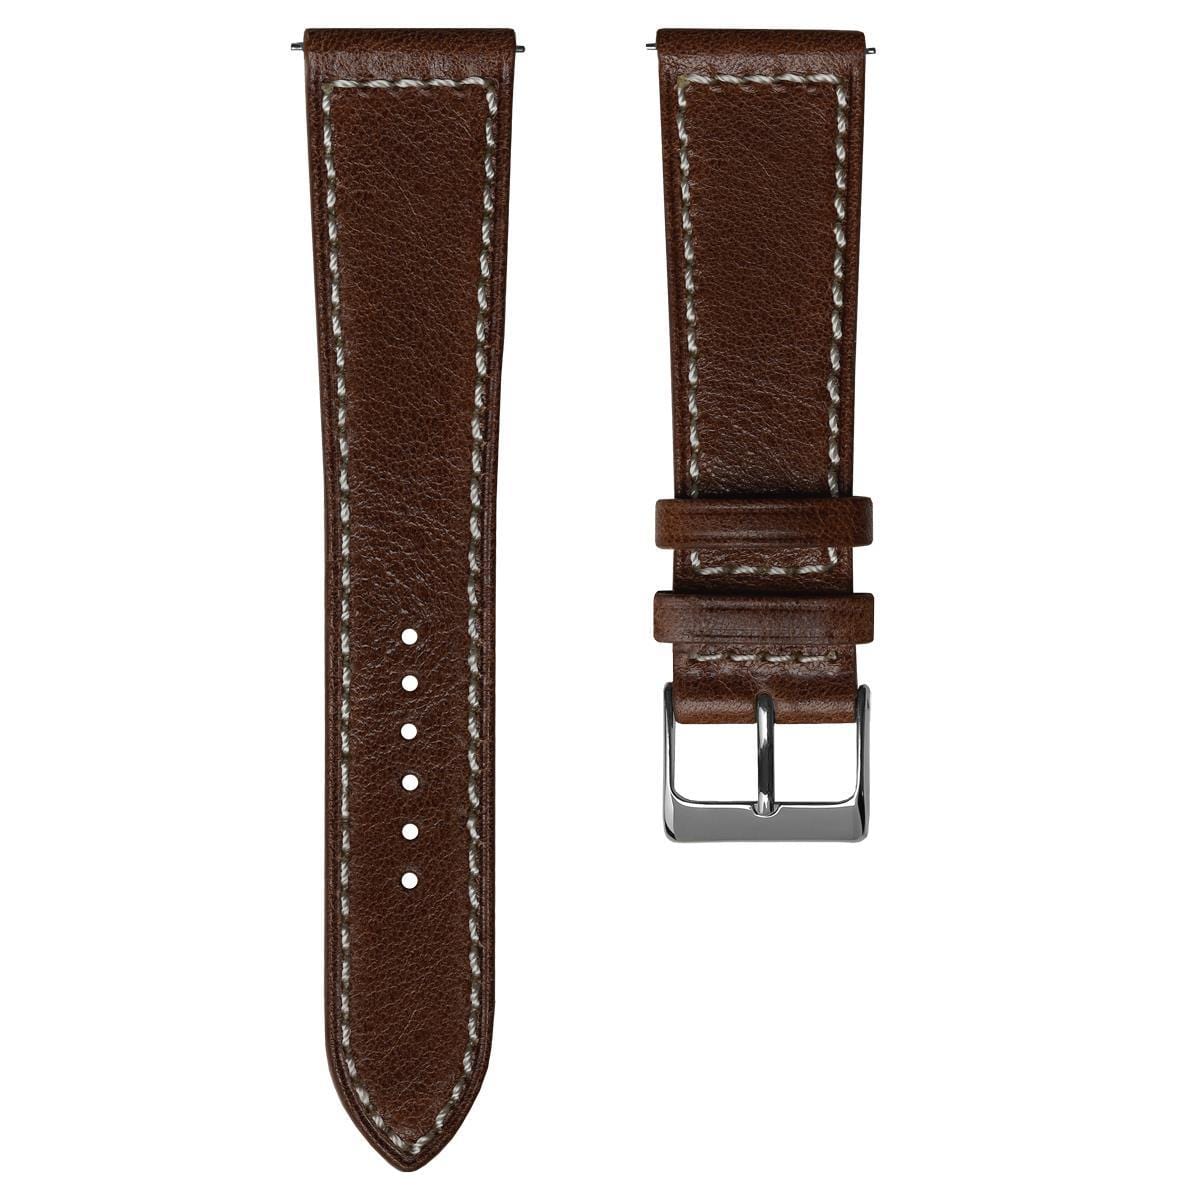 Dulas Vintage Leather Quick Release Watch Strap - Brown/White Stitch